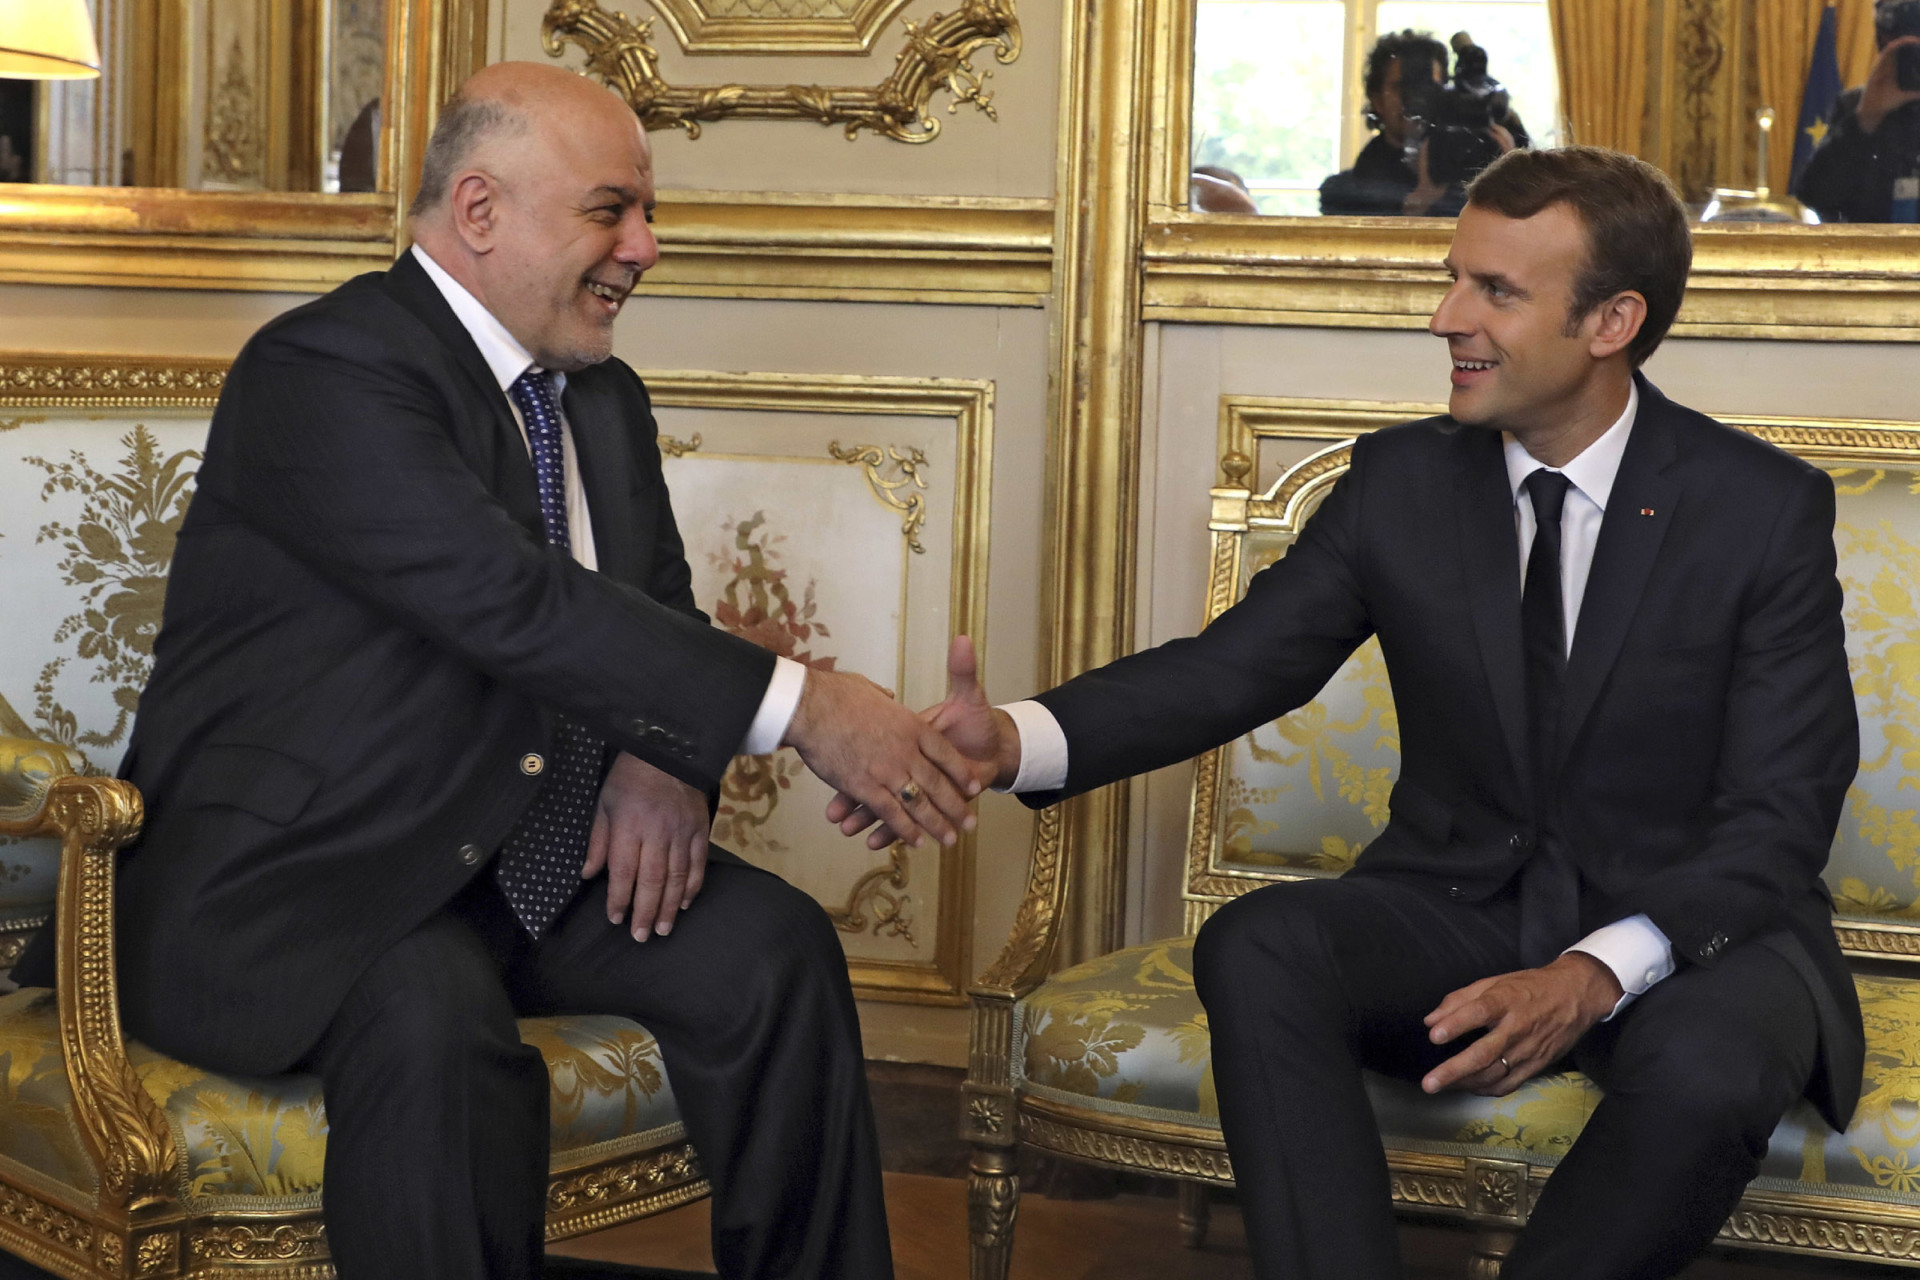 French president Emmanuel Macron shakes hands with Iraqi Prime minister Haider al-Abadi